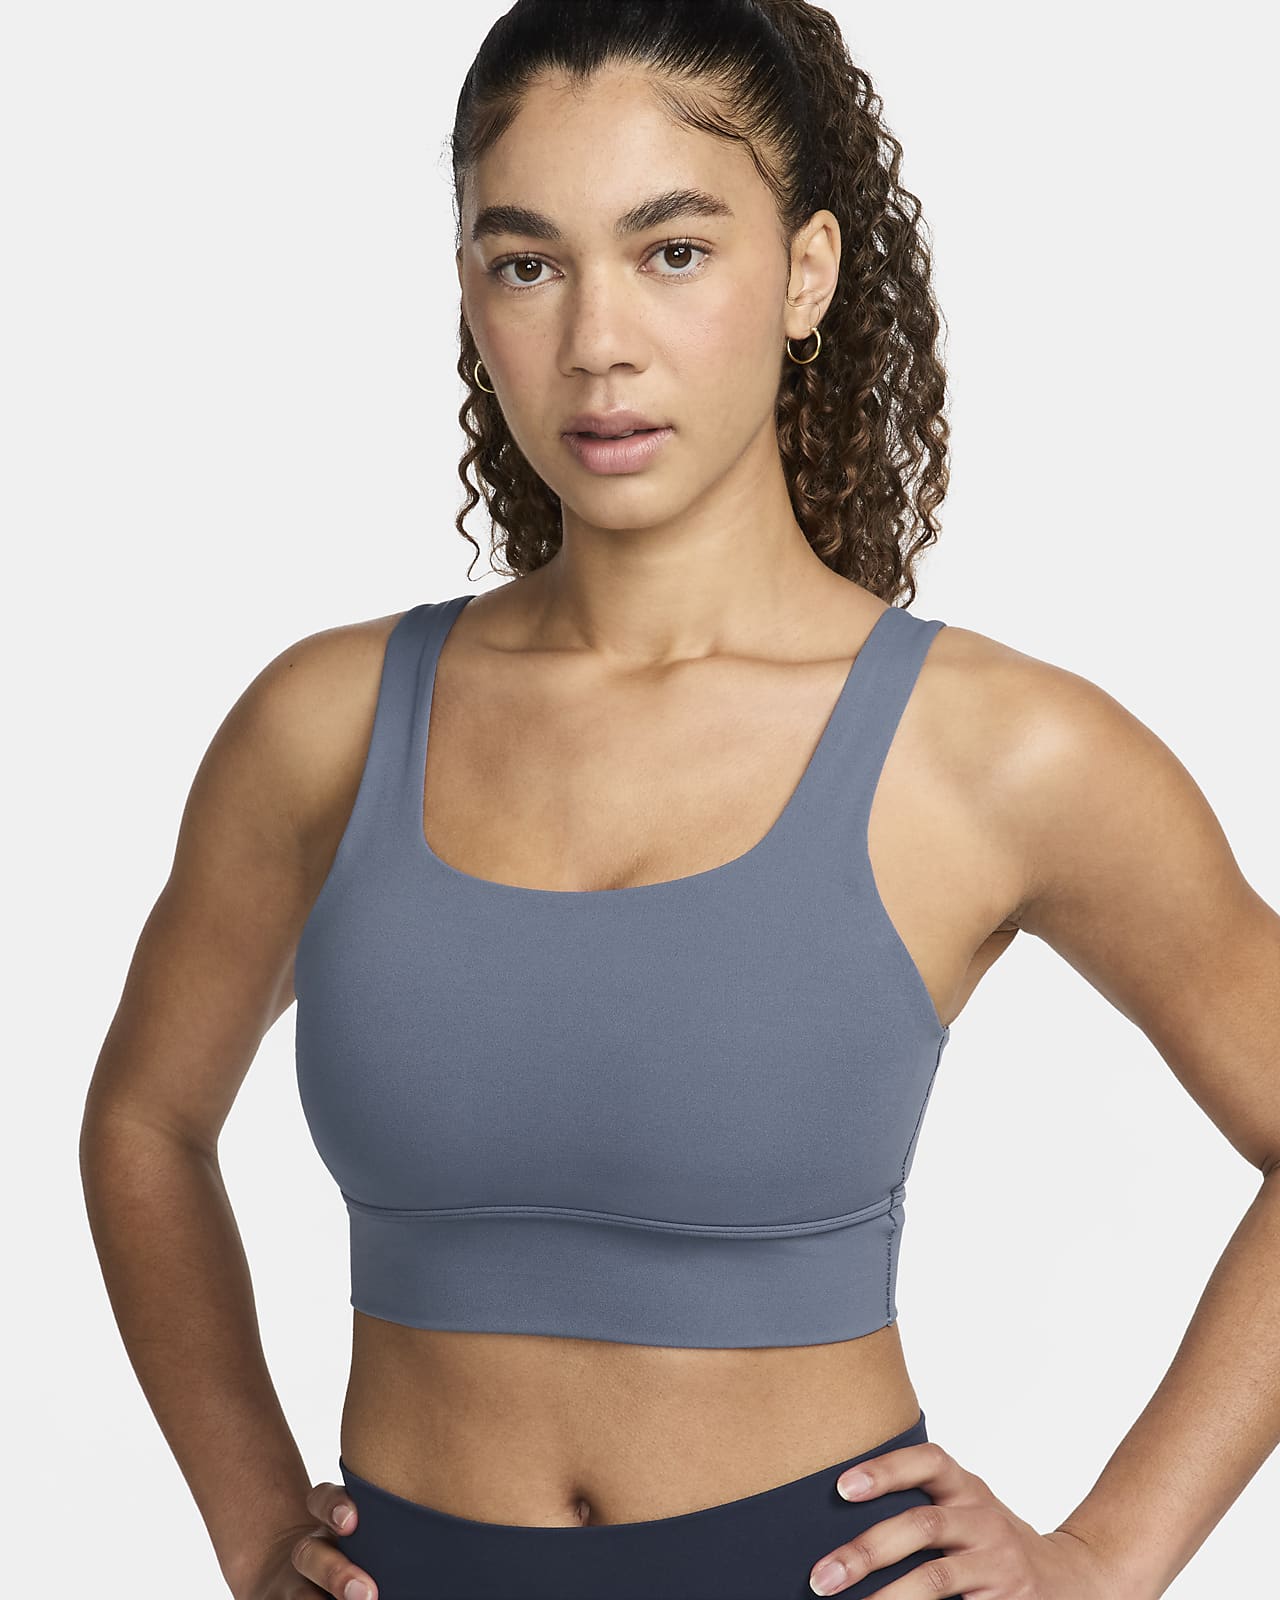 NEW! Nike [S] Women's Swoosh Pocket Padded Sports/Yoga Bra, Black